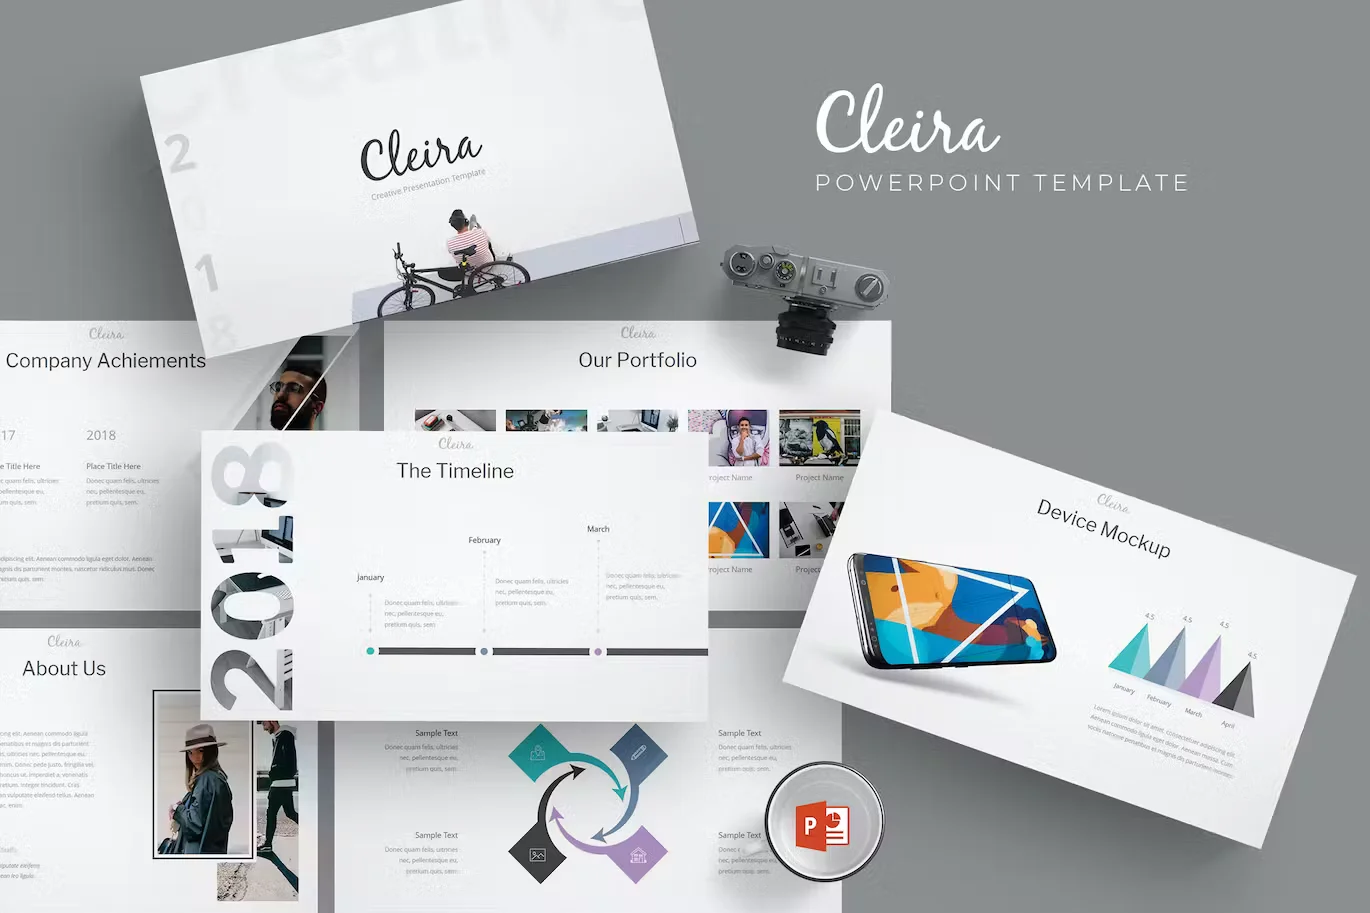 cleira-powerpoint-templates-01